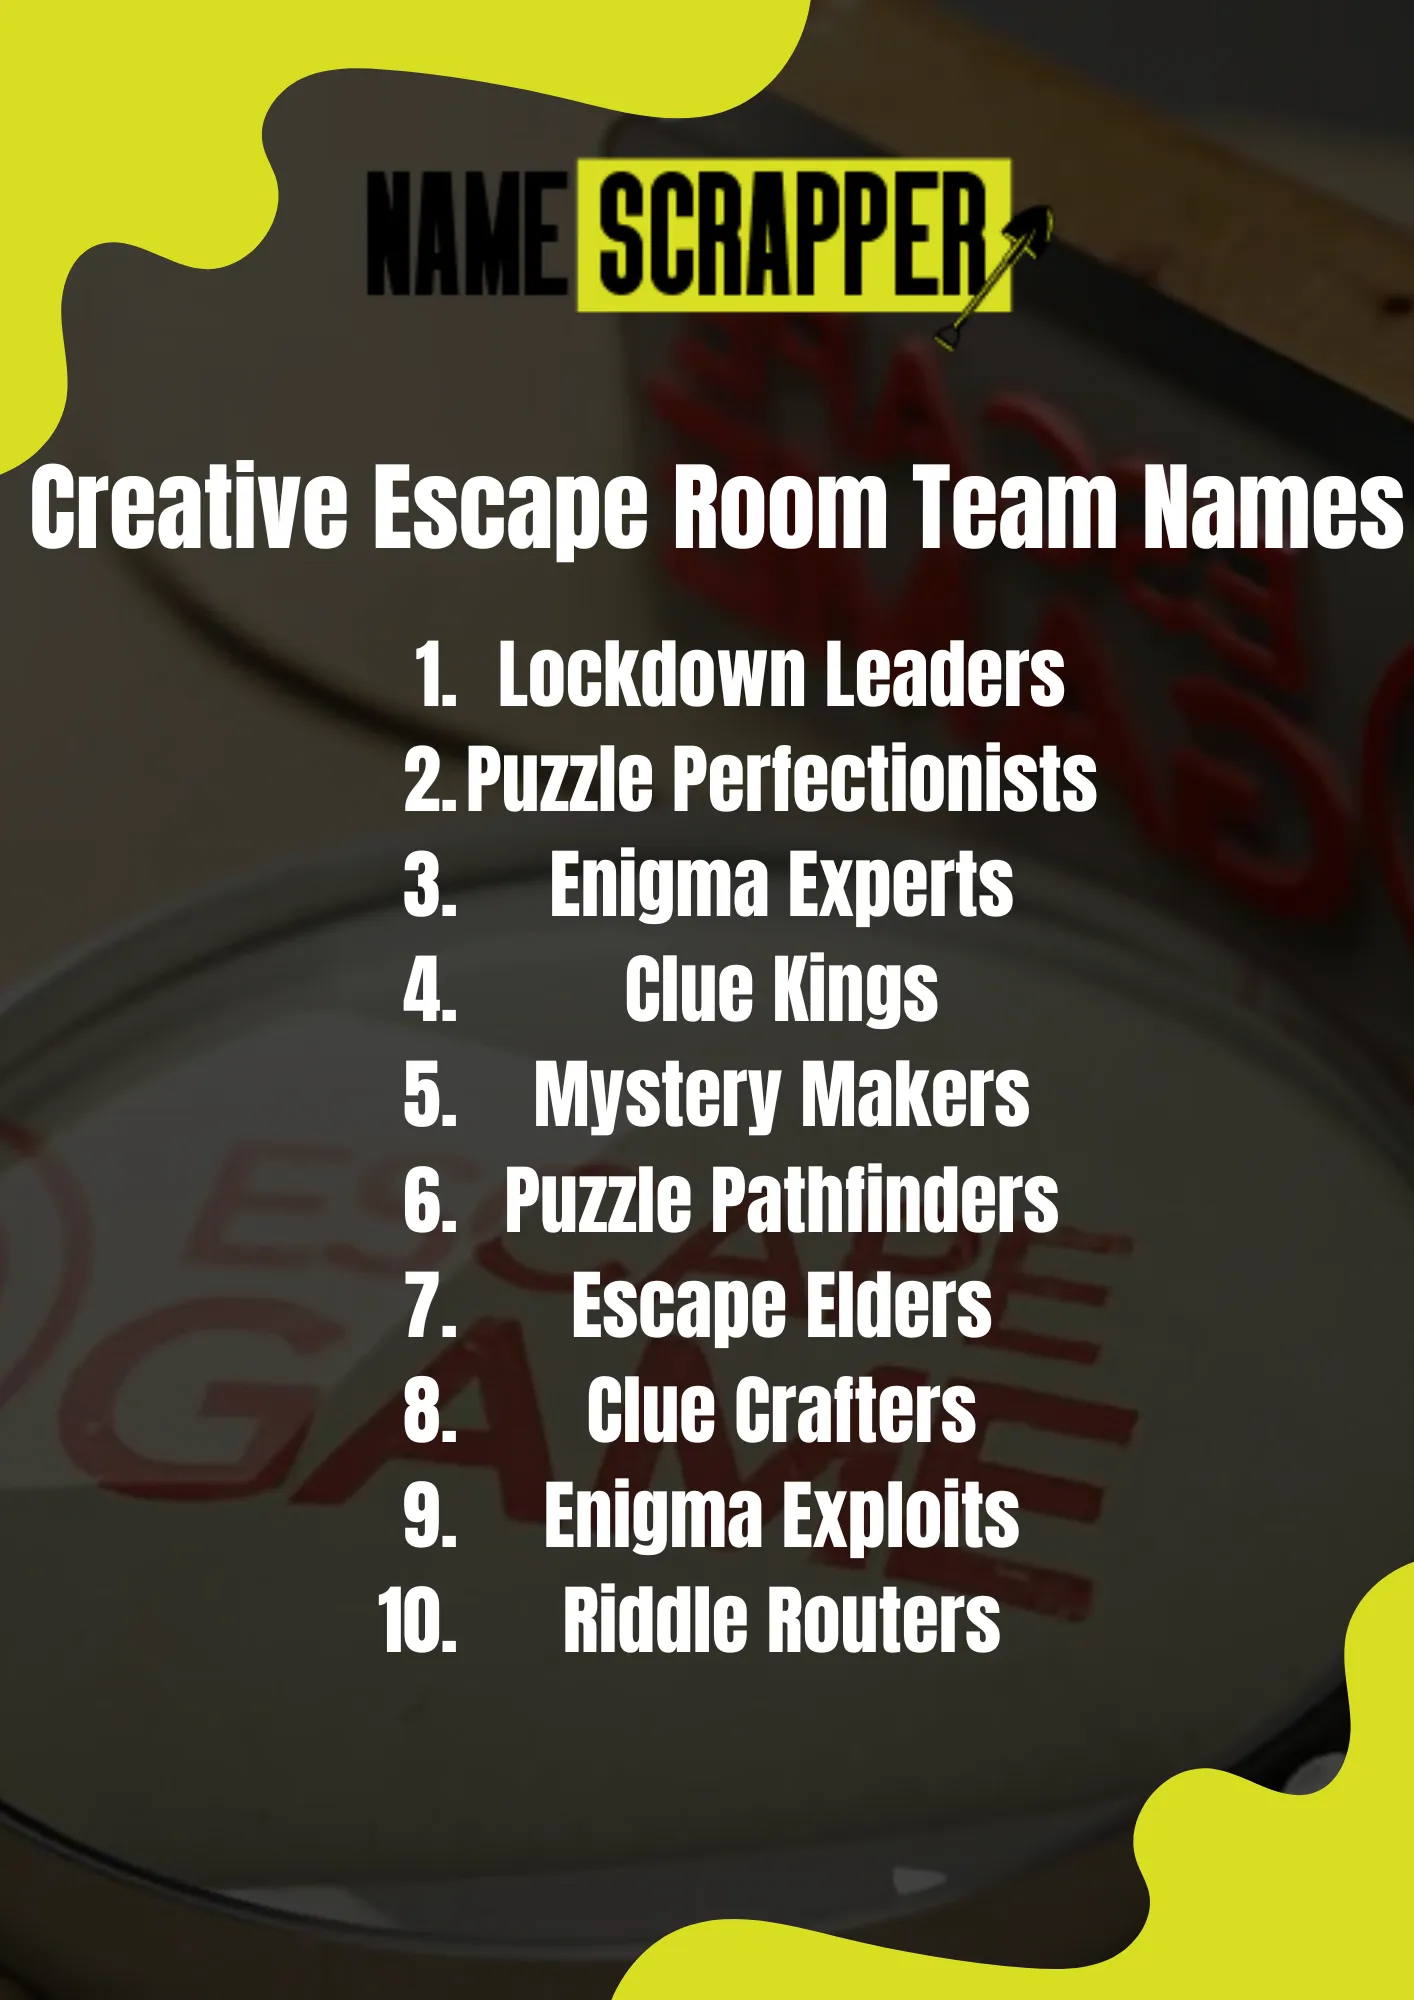 Creative Escape Room Team Names